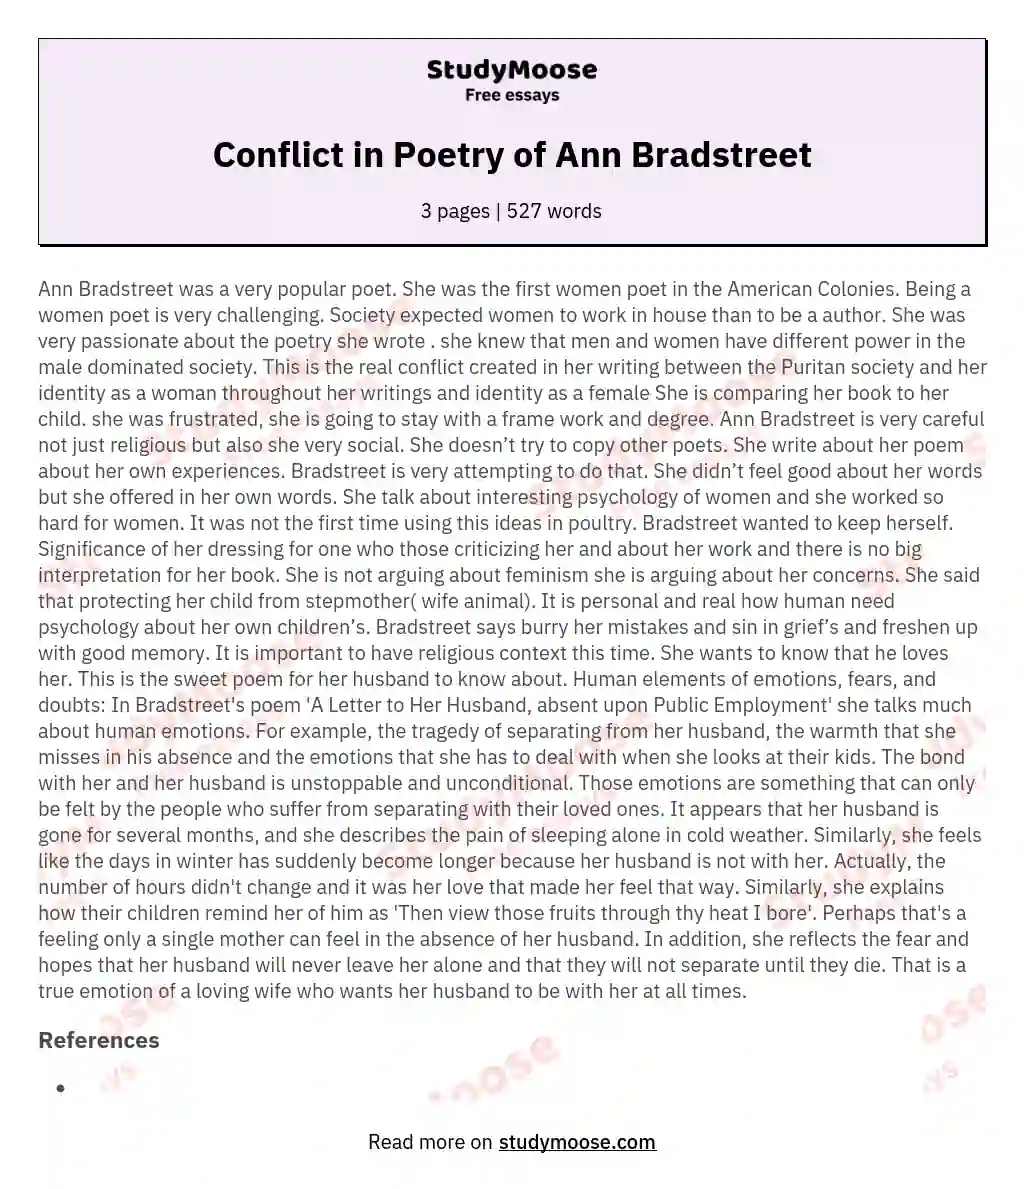 Conflict in Poetry of Ann Bradstreet essay